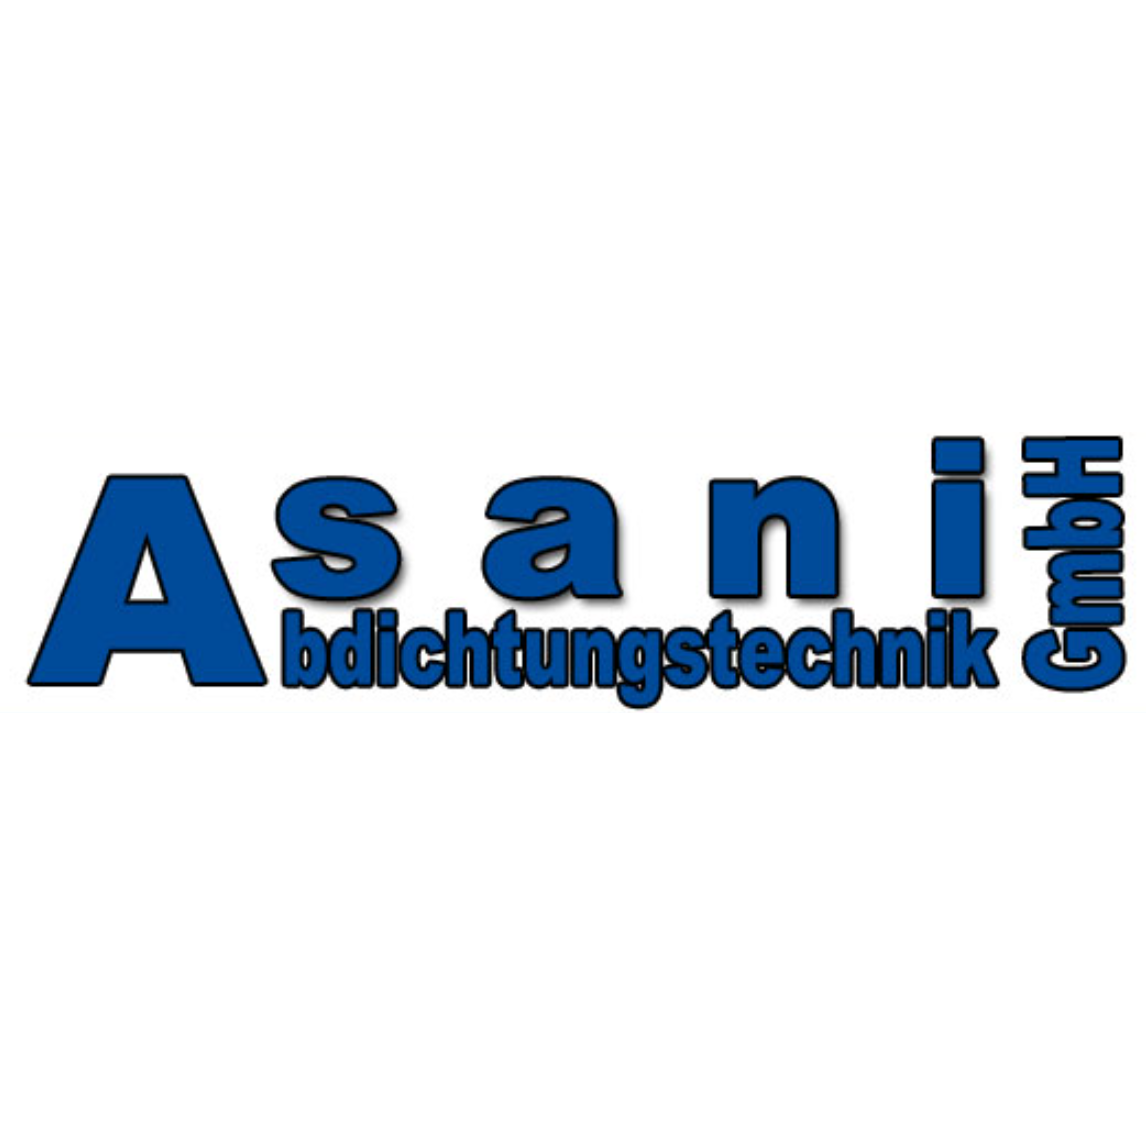 Asani GmbH Logo